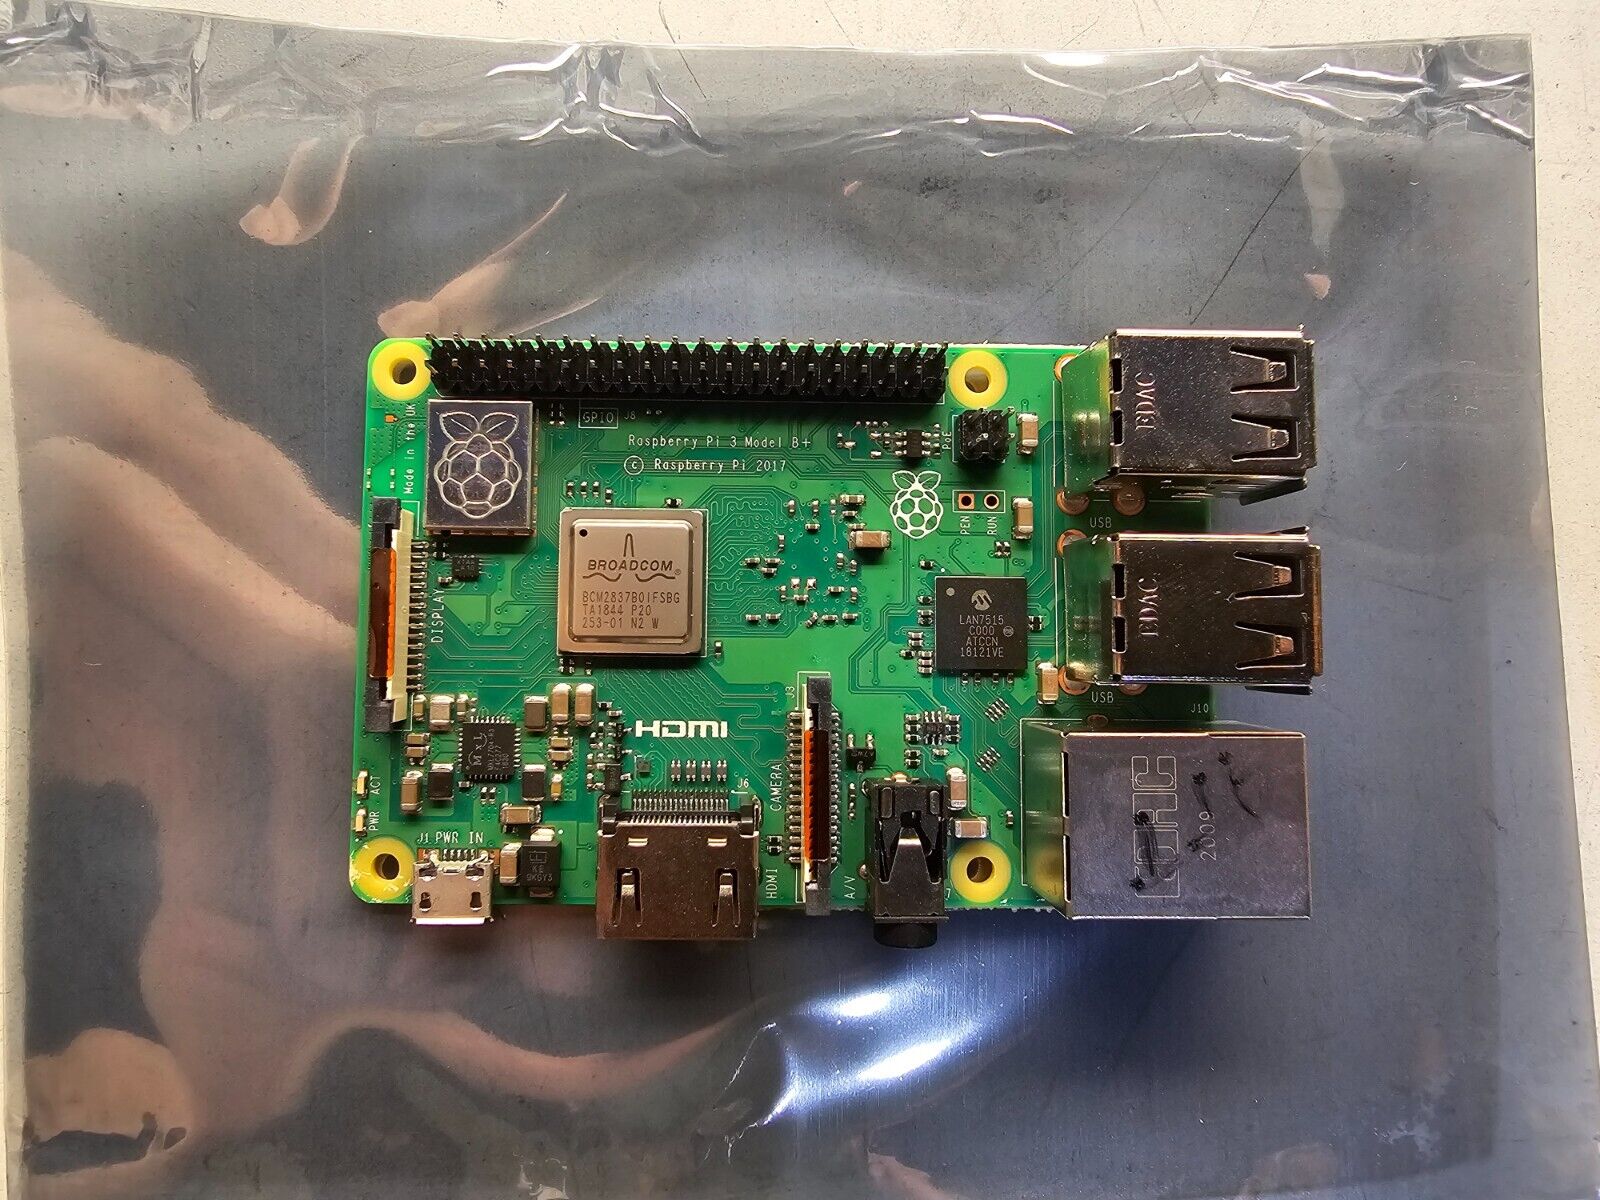 Raspberry Pi 3 Model B+ (Broadcom BCM2837, 1.4 GHz, 1 GB RAM) Single-Board